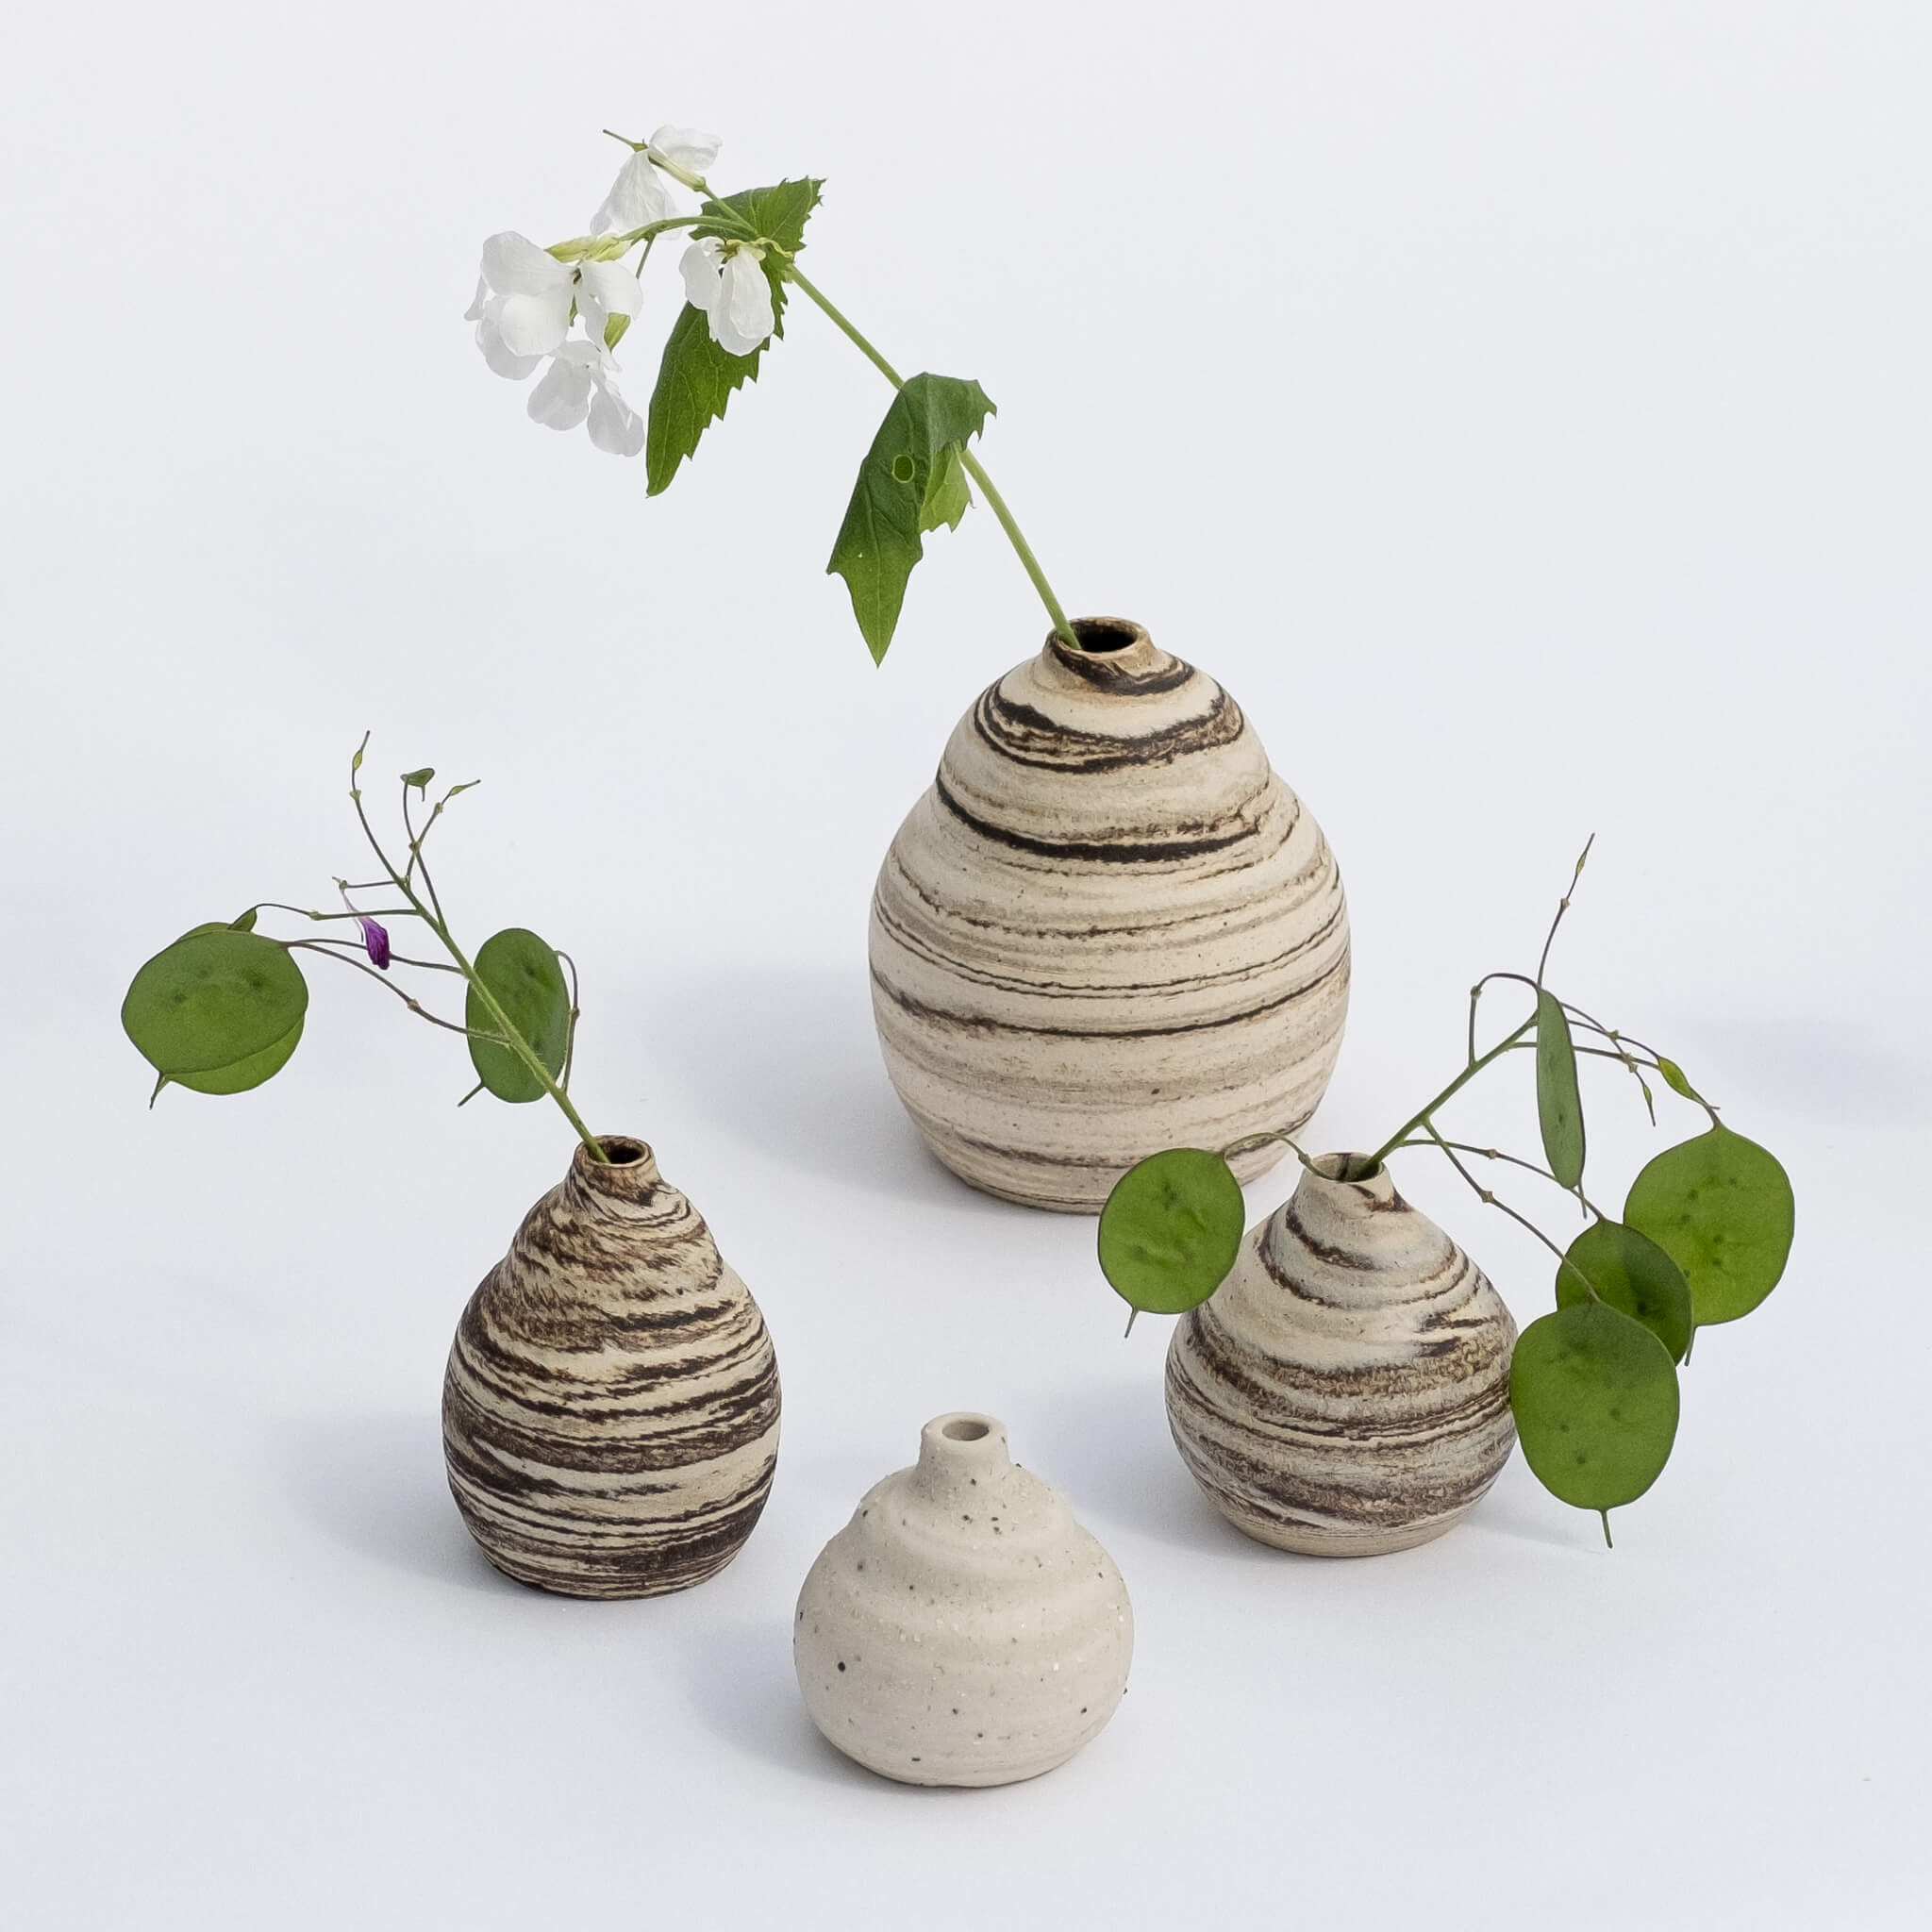 Small and mini Sandscape vases